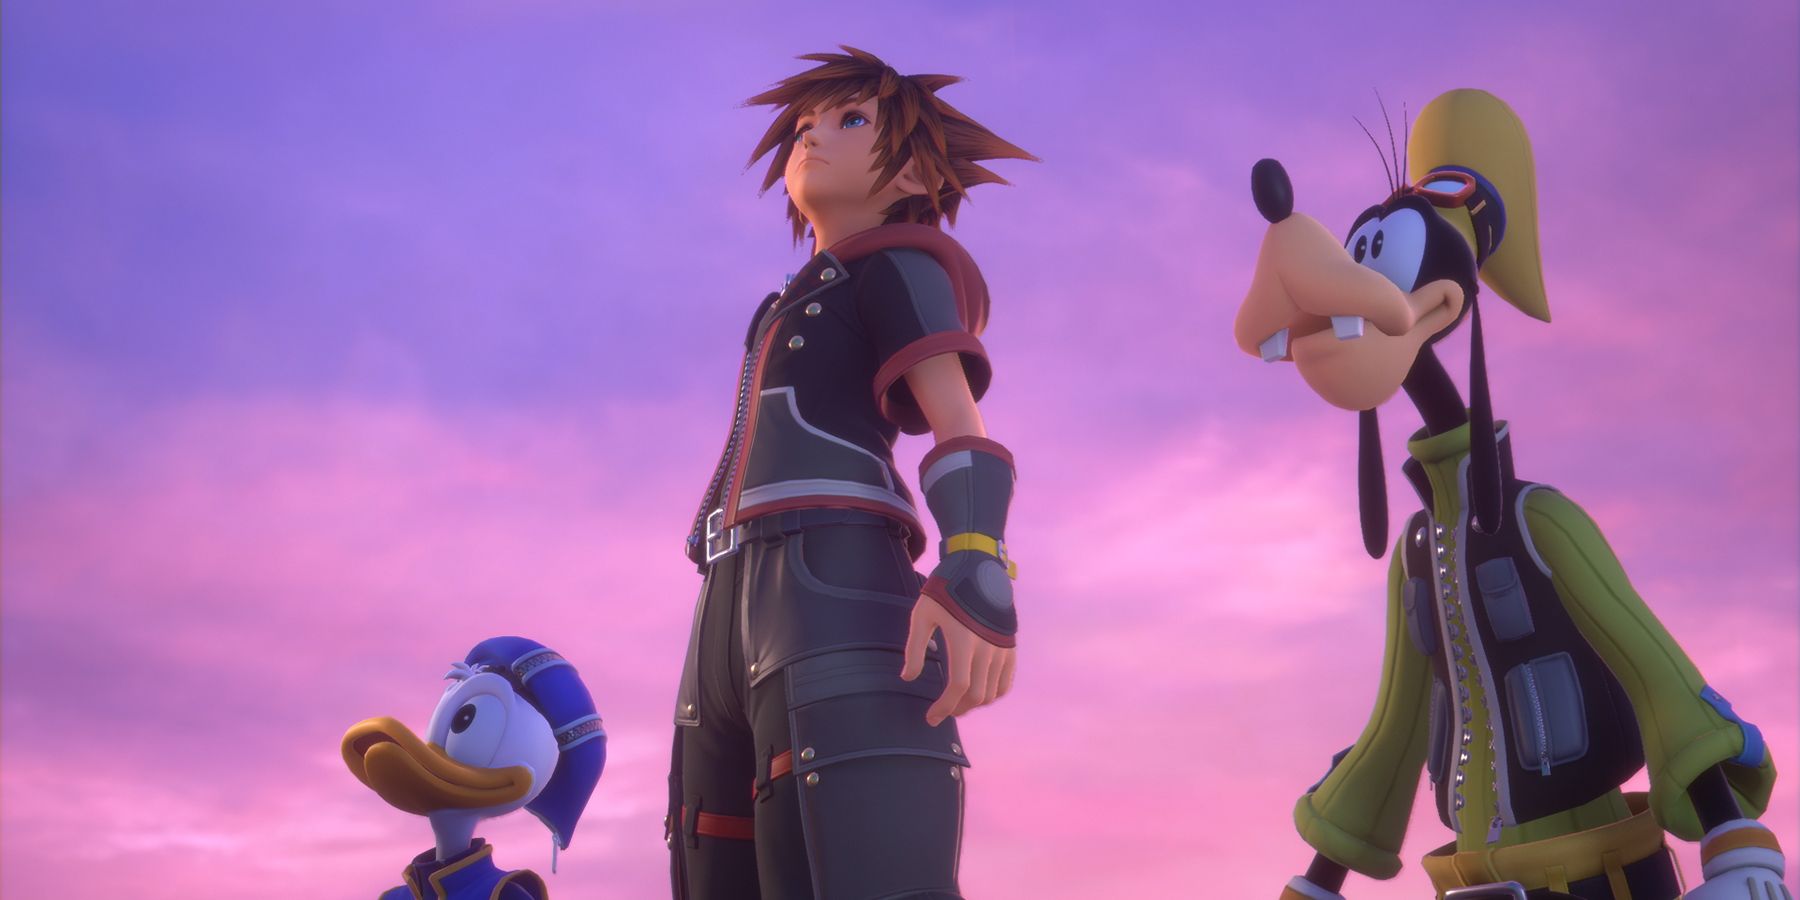 Characters looking upwards in Kingdom Hearts 3